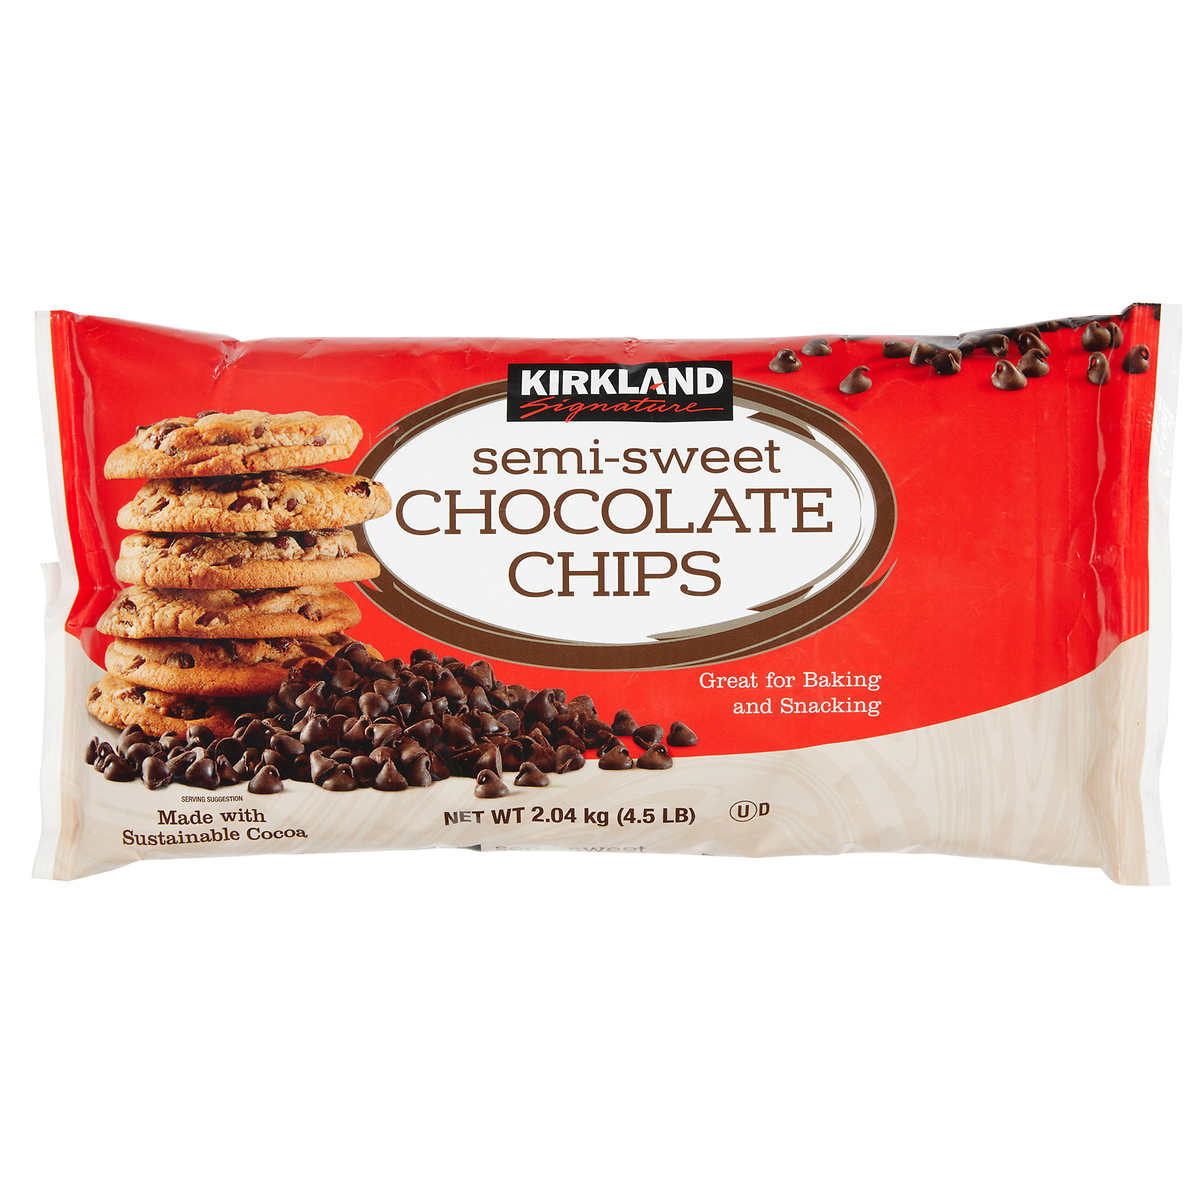 Kirkland Signature Semi-Sweet Chocolate Chips, 4.5 Lbs